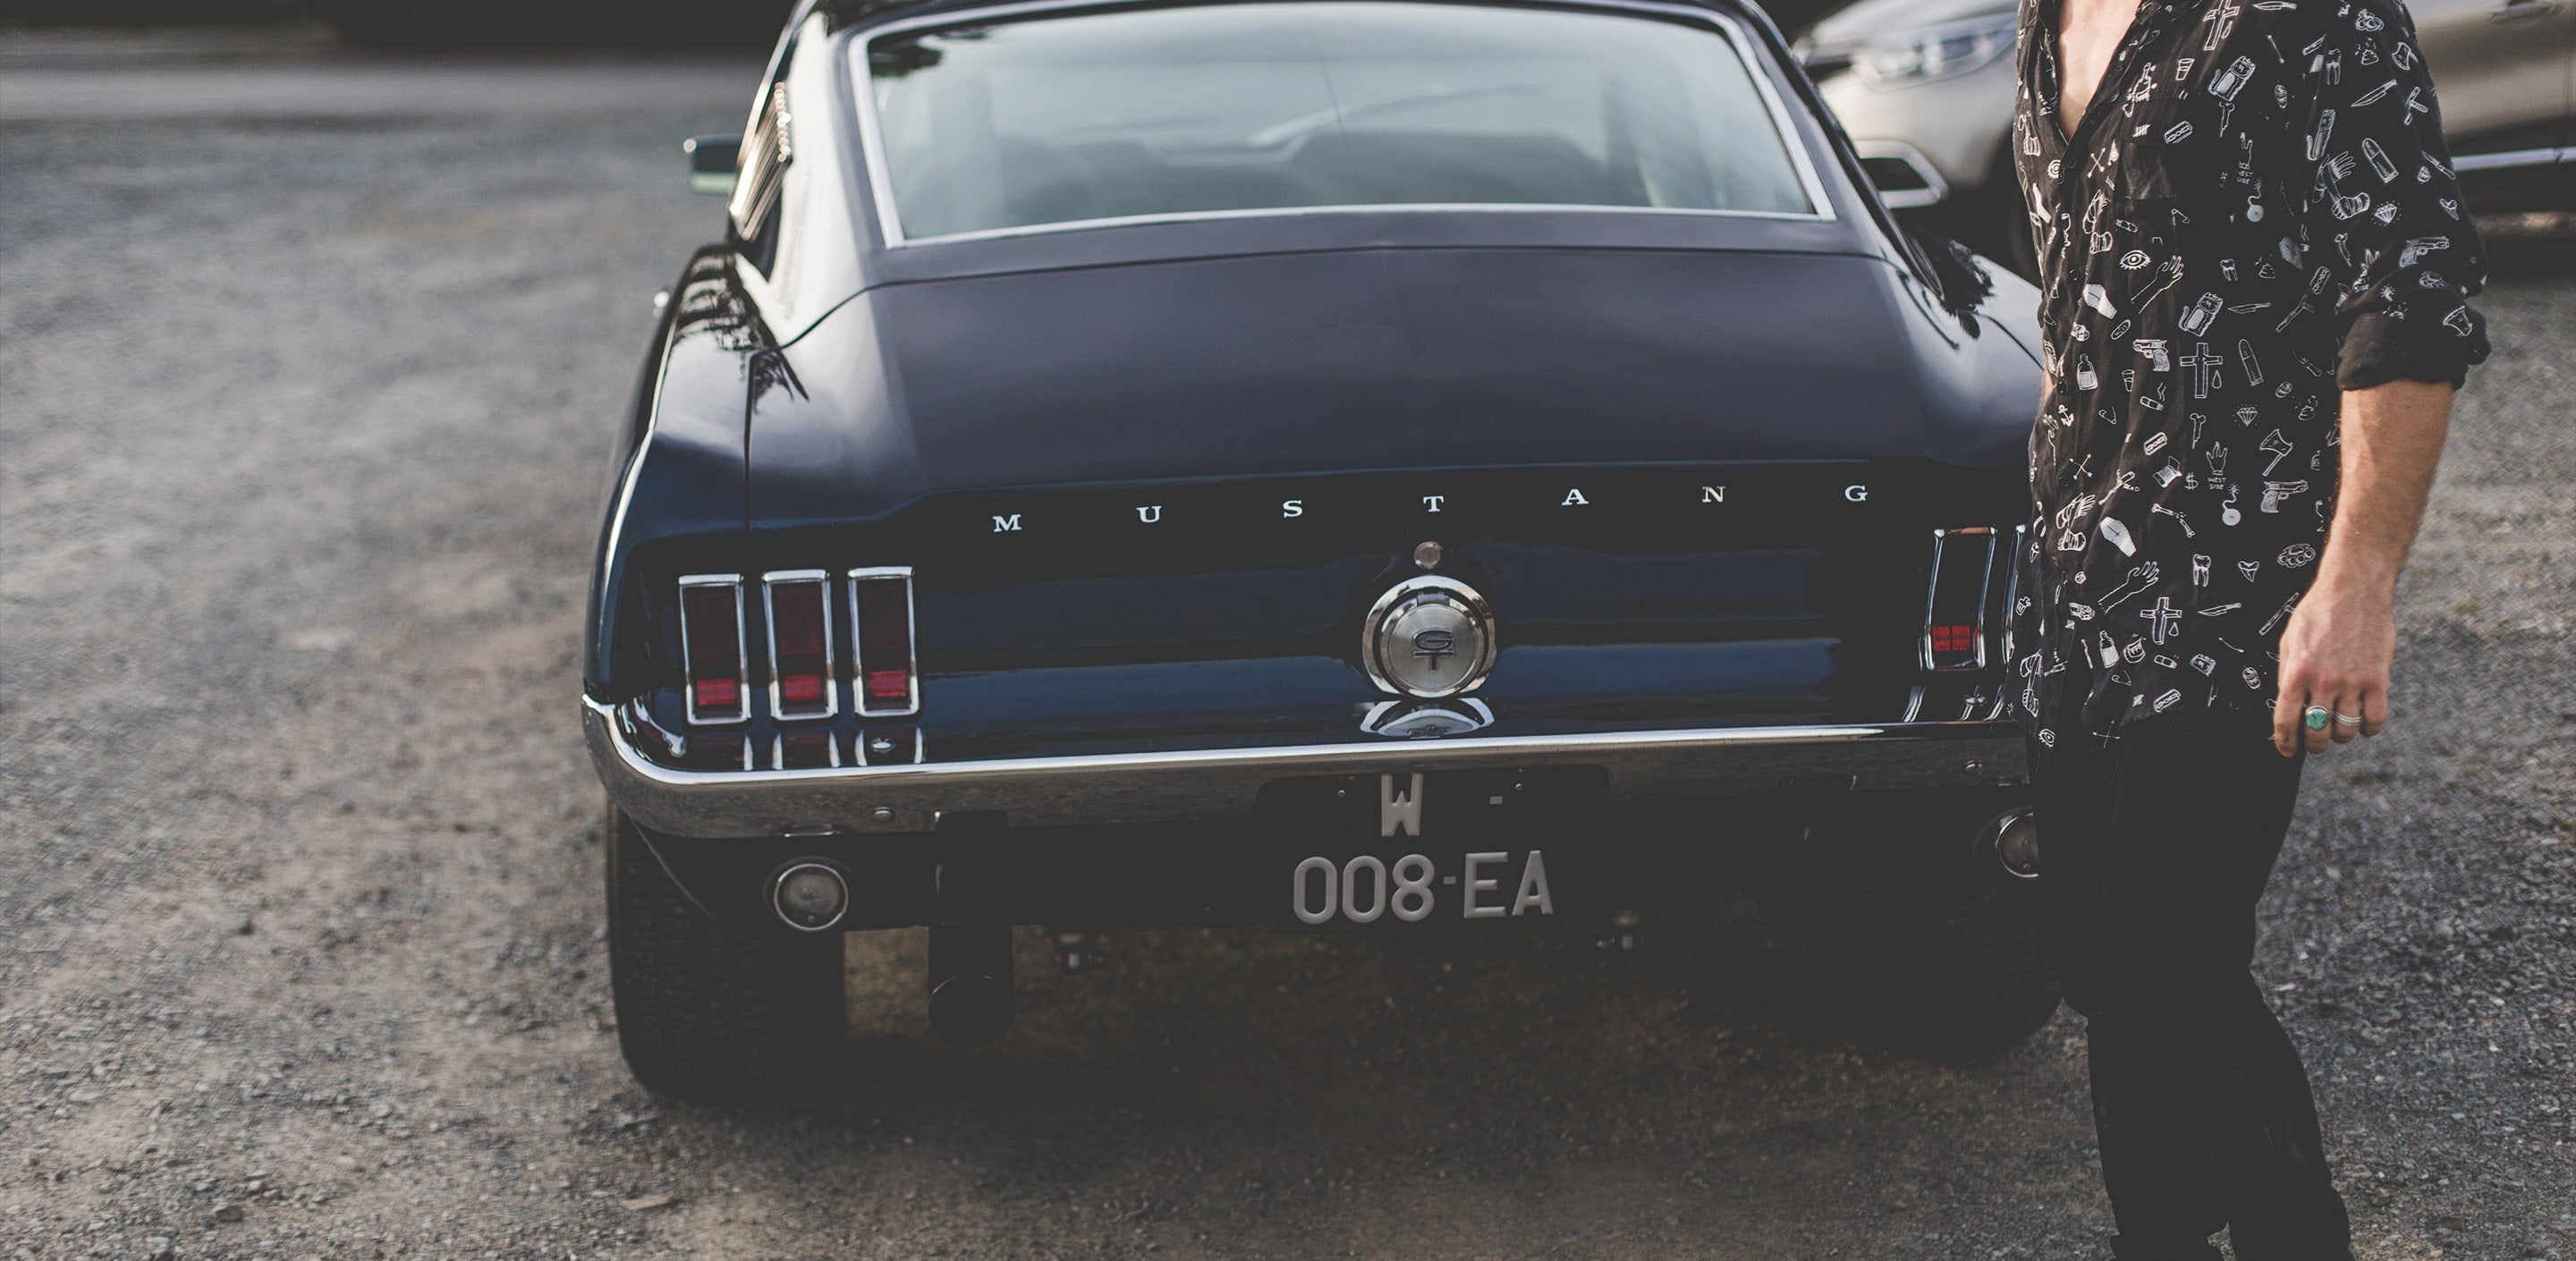 Mustang rear view